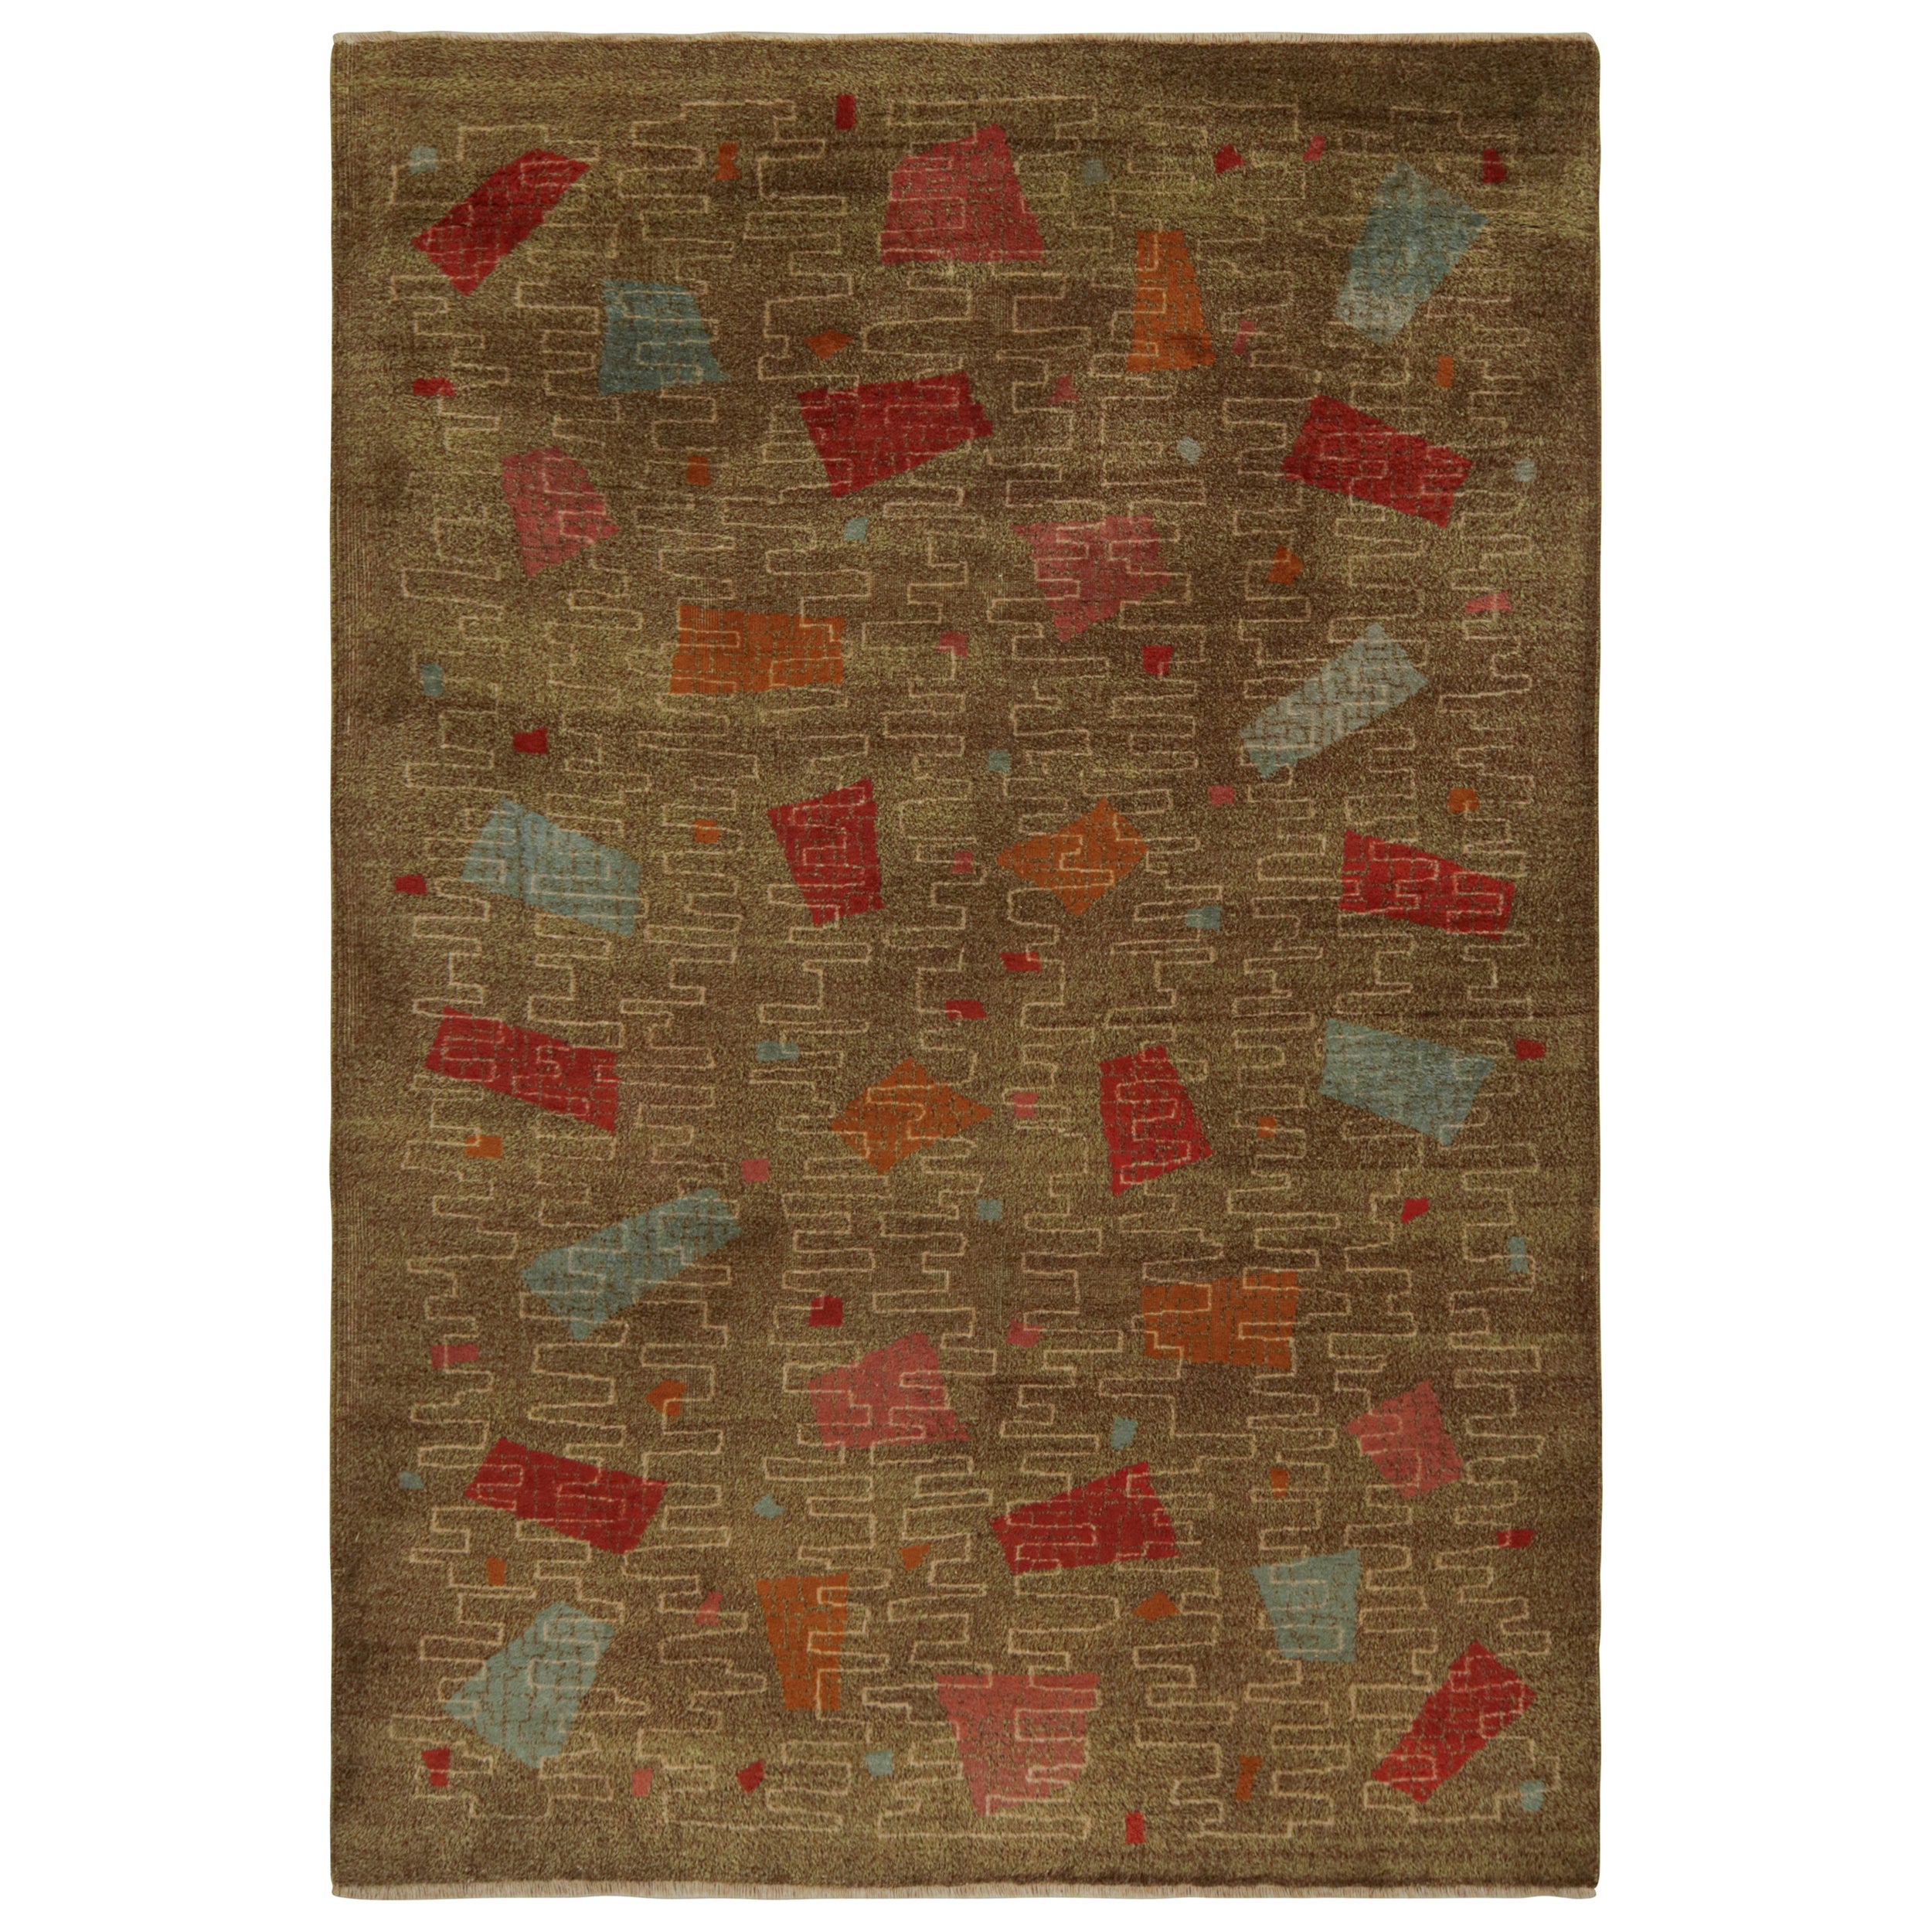 Vintage Zeki Muren Art Deco rug, with Geometric patterns, from Rug & Kilim For Sale